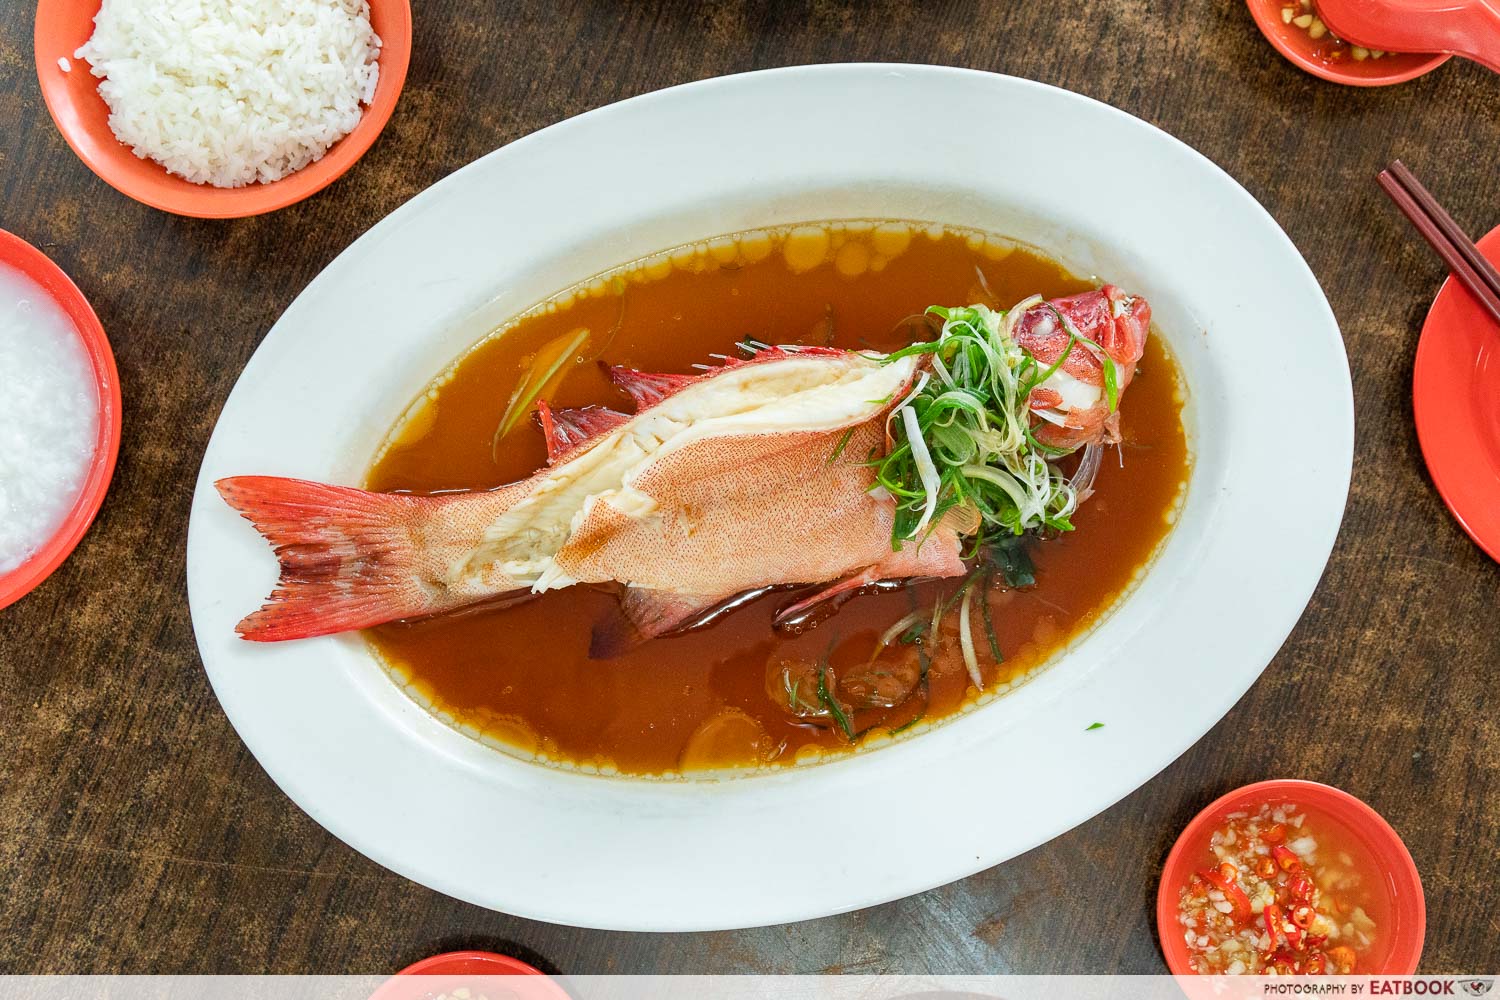 zai shun curry fish head cantonese style steam fish